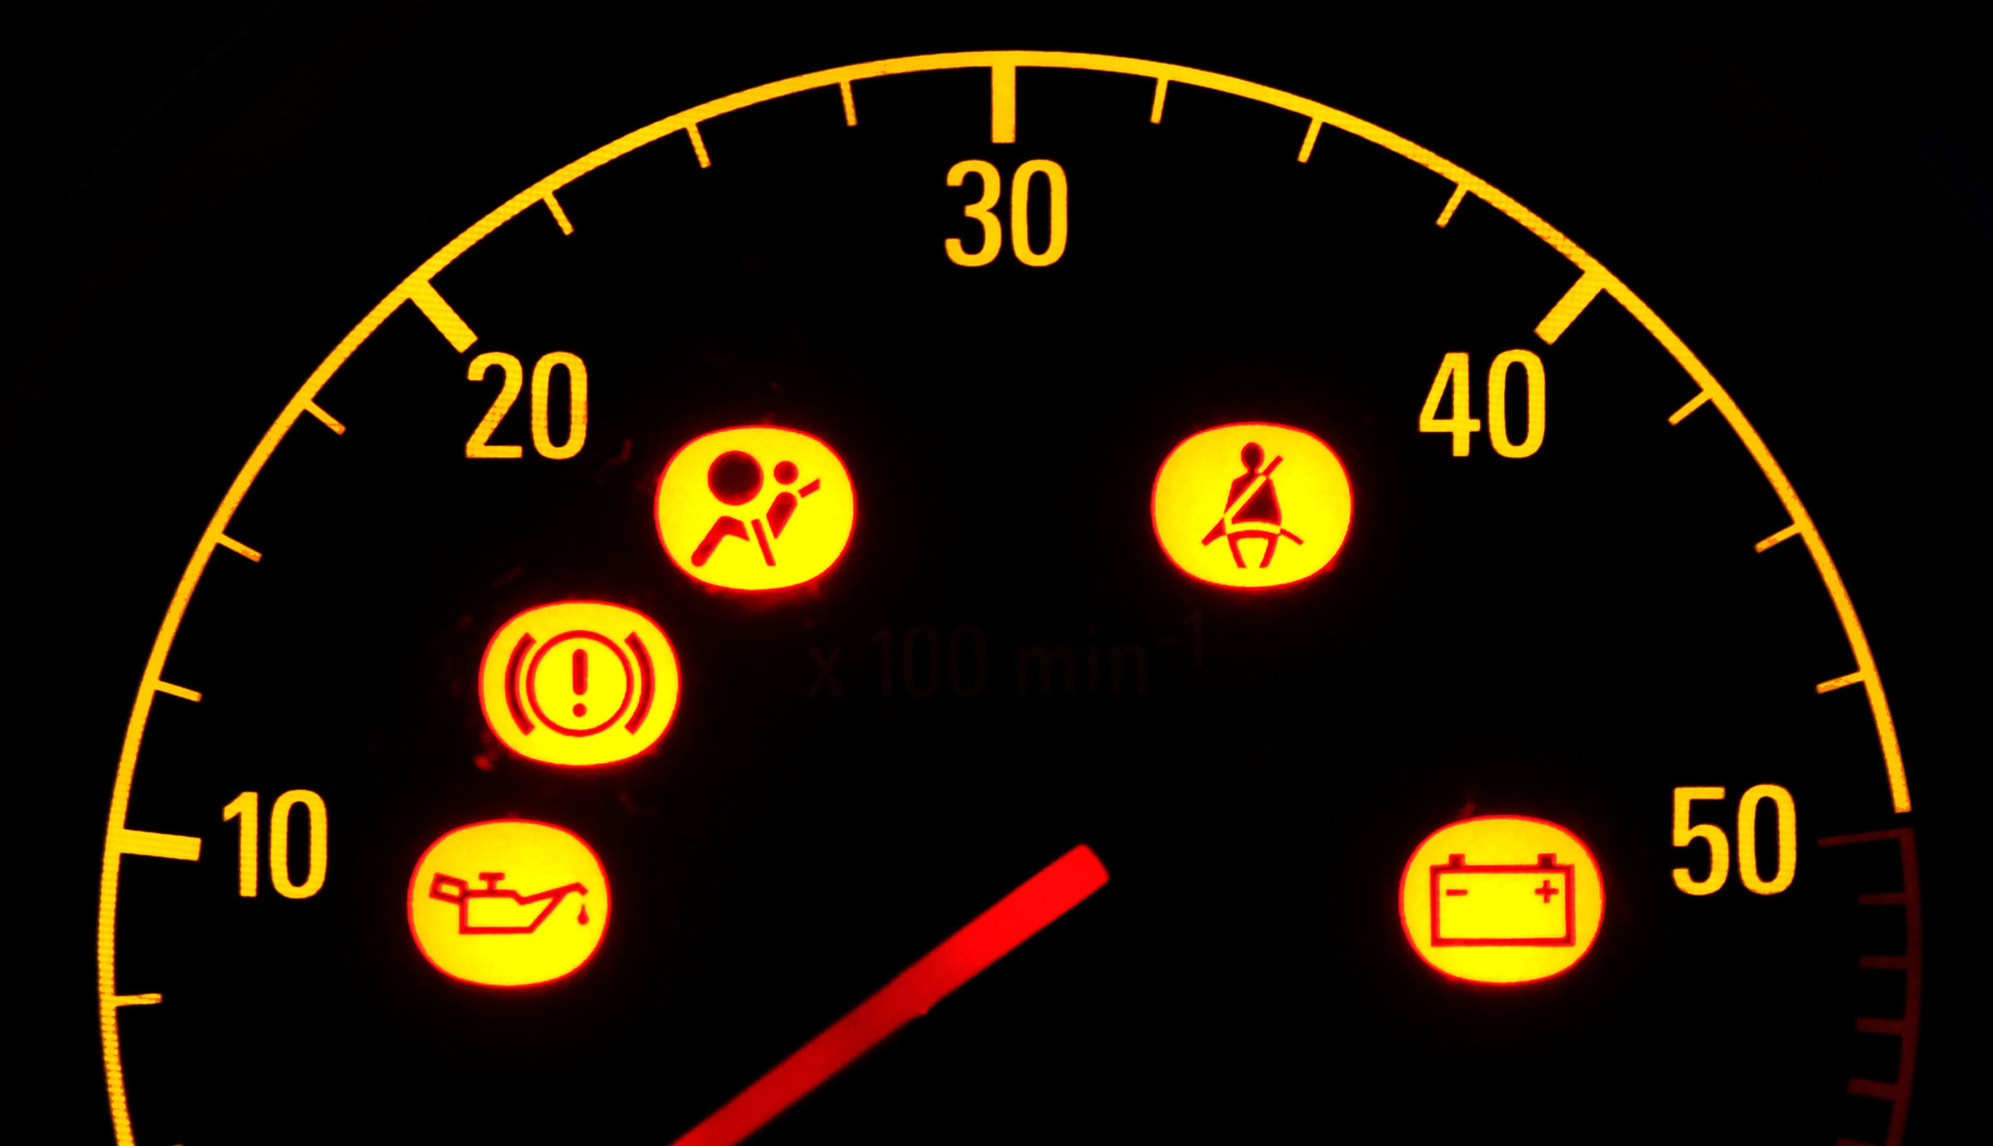 http://s.aolcdn.com/commerce/blogcdn/slideshows/images/slides/260/613/0/S2606130/slug/l/car-rev-counter-with-illuminated-warning-symbols-uk-2.jpg